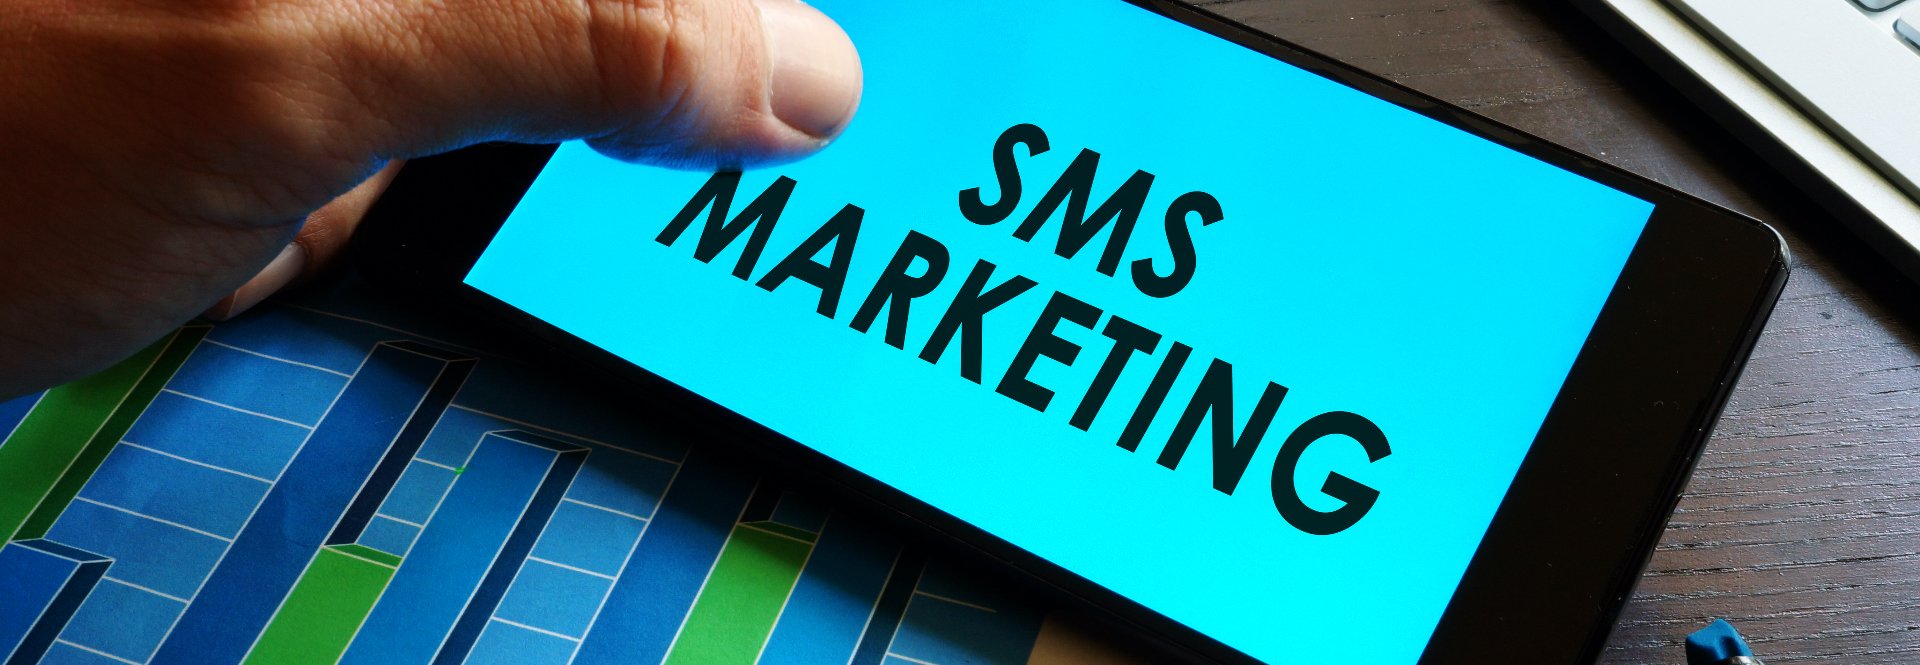 Bulk SMS Marketing Service หรือบริการส่งข้อความจำนวนมากสำหรับทำการตลาด